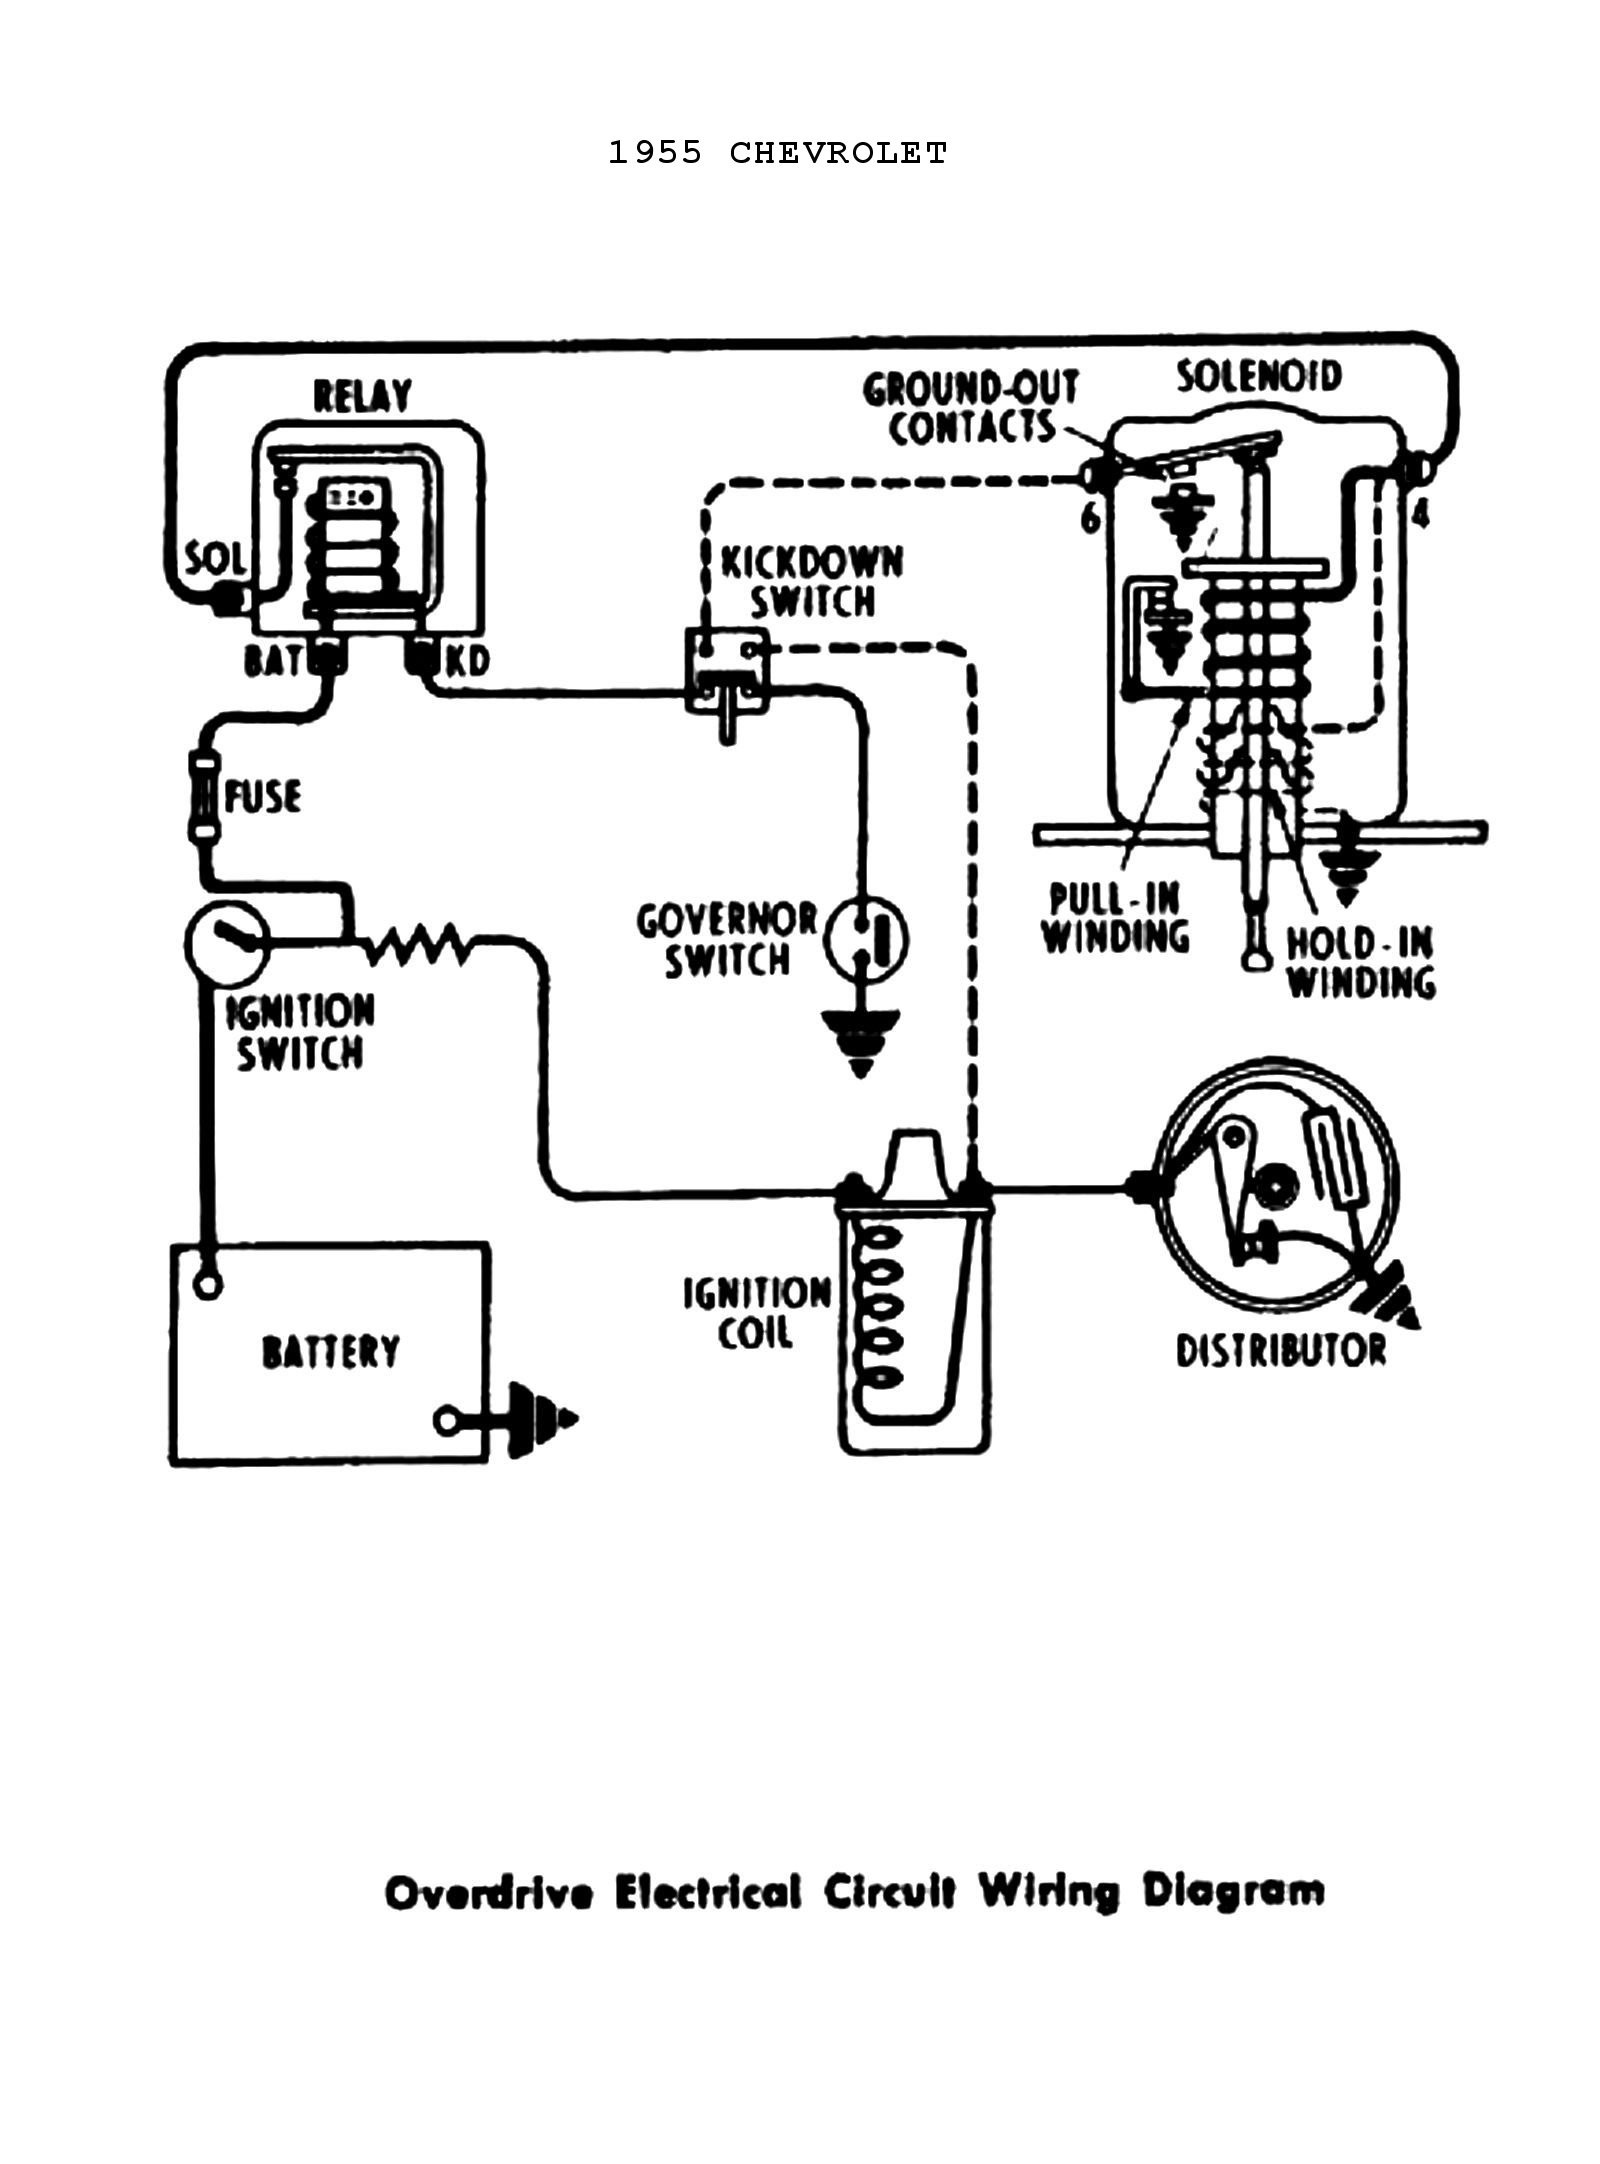 Remote Car Starter Wiring Diagram 1955 Power Windows & Seats · 1955 Overdrive Circuit